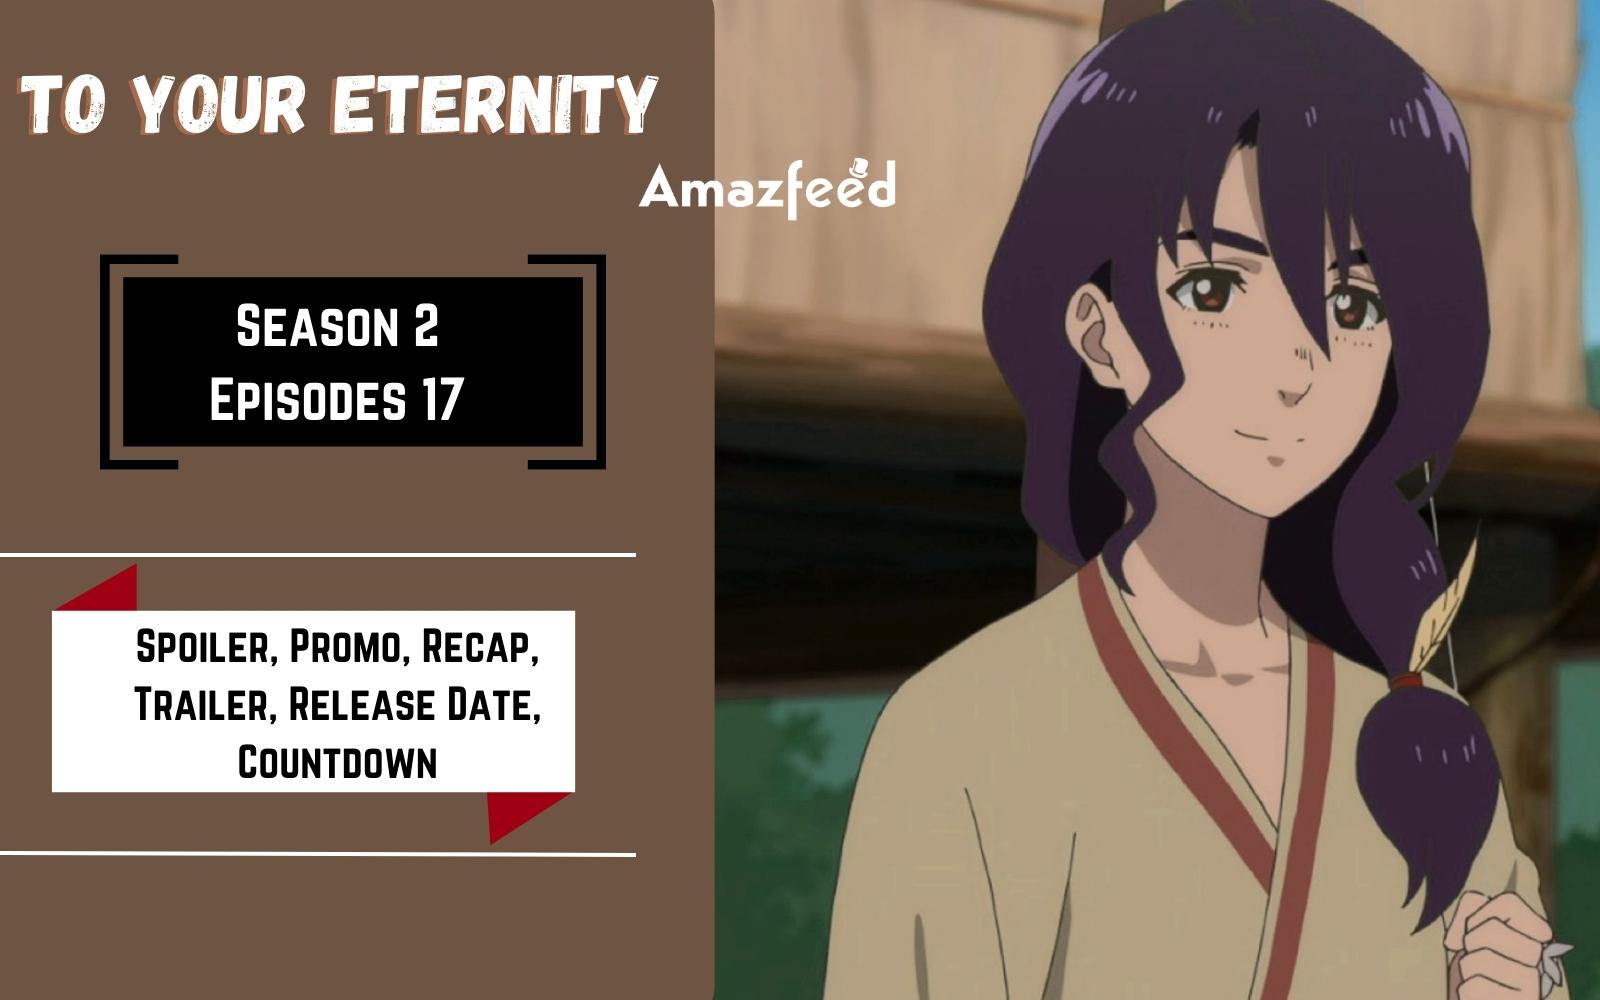 To Your Eternity Season 2 - Episode 17